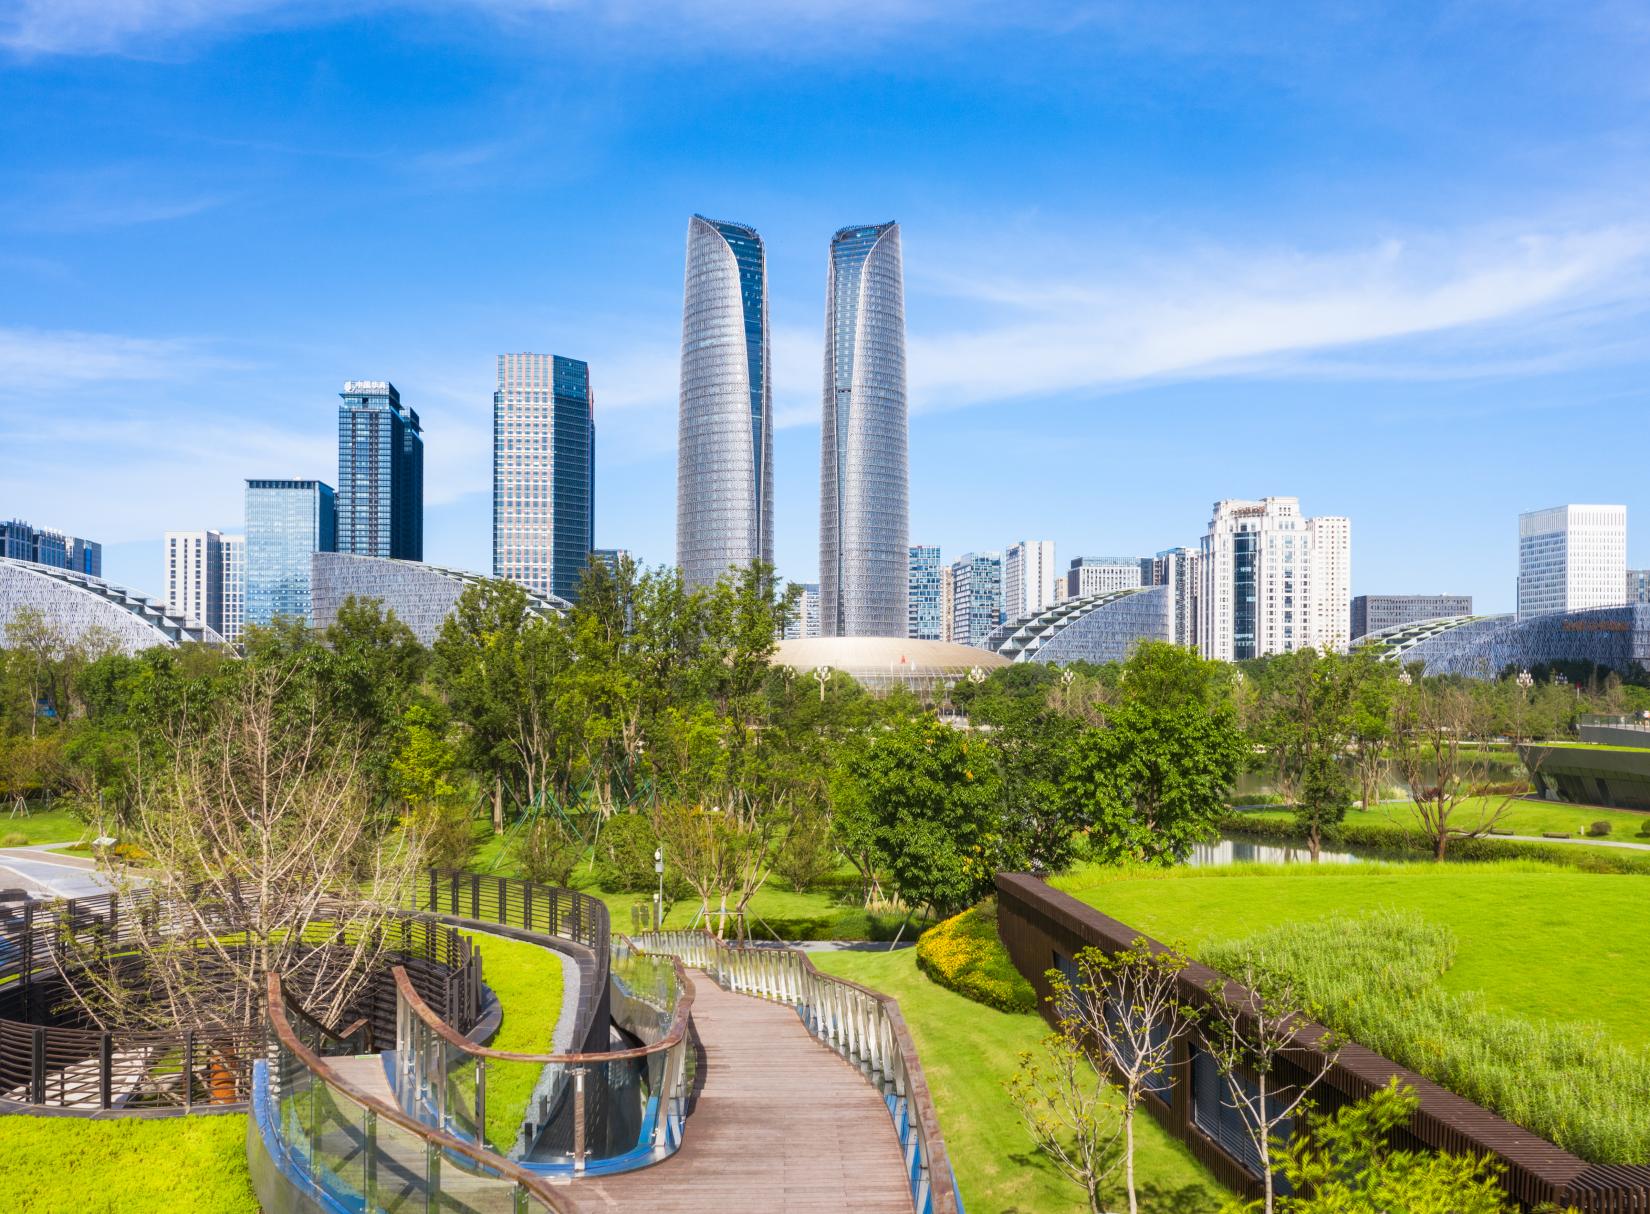 5th Chengdu Forum for Park Cities Towards Carbon Neutrality